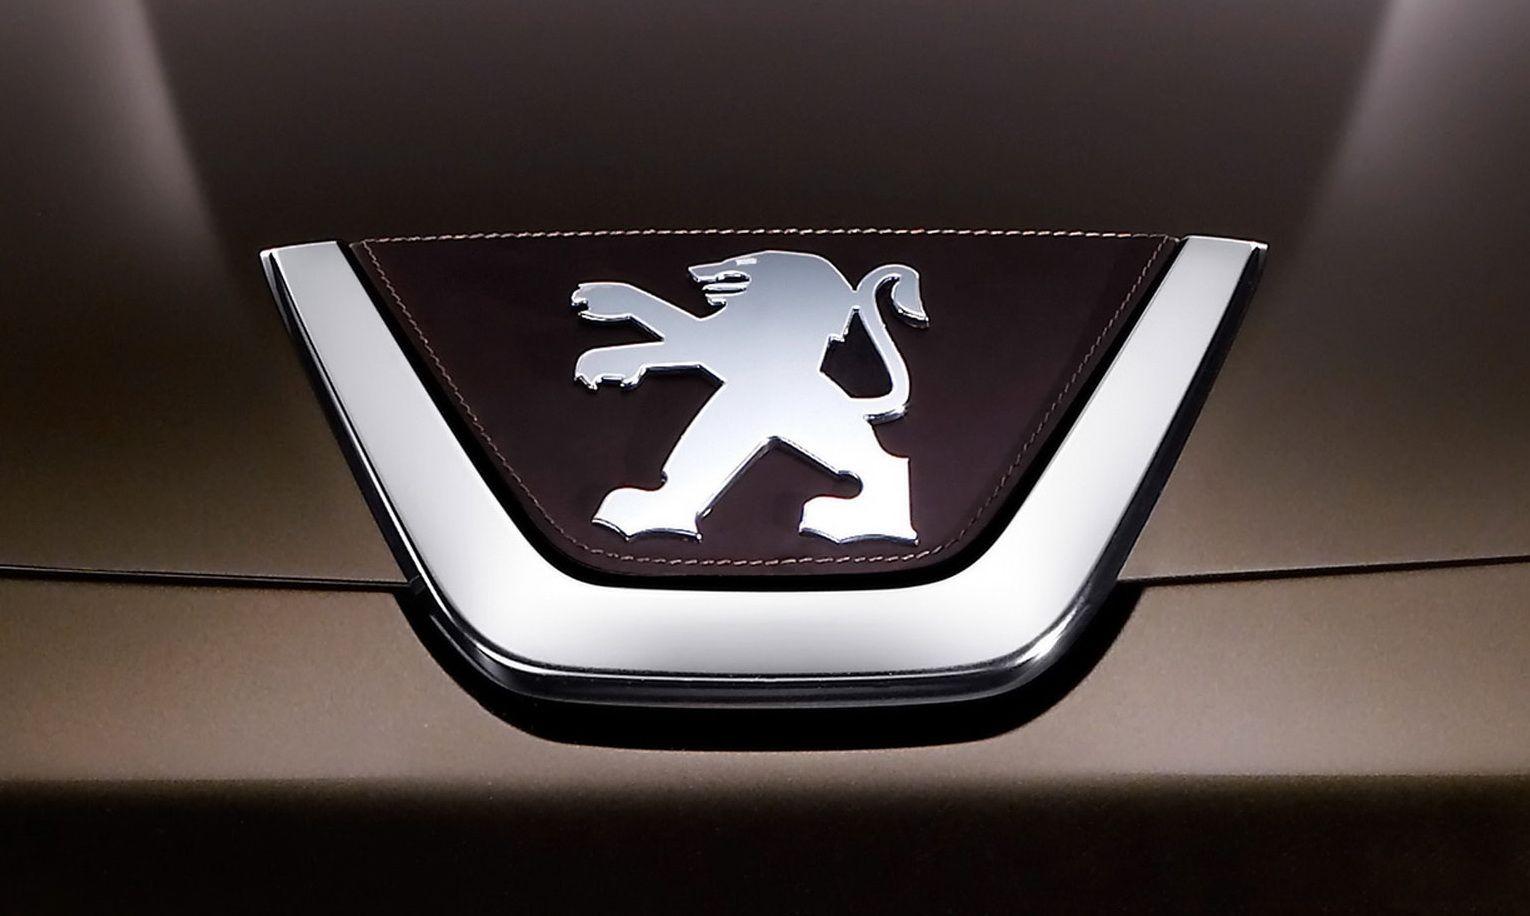 Rich Car Logo - Peugeot Logo, Peugeot Car Symbol Meaning and History | Car Brand ...